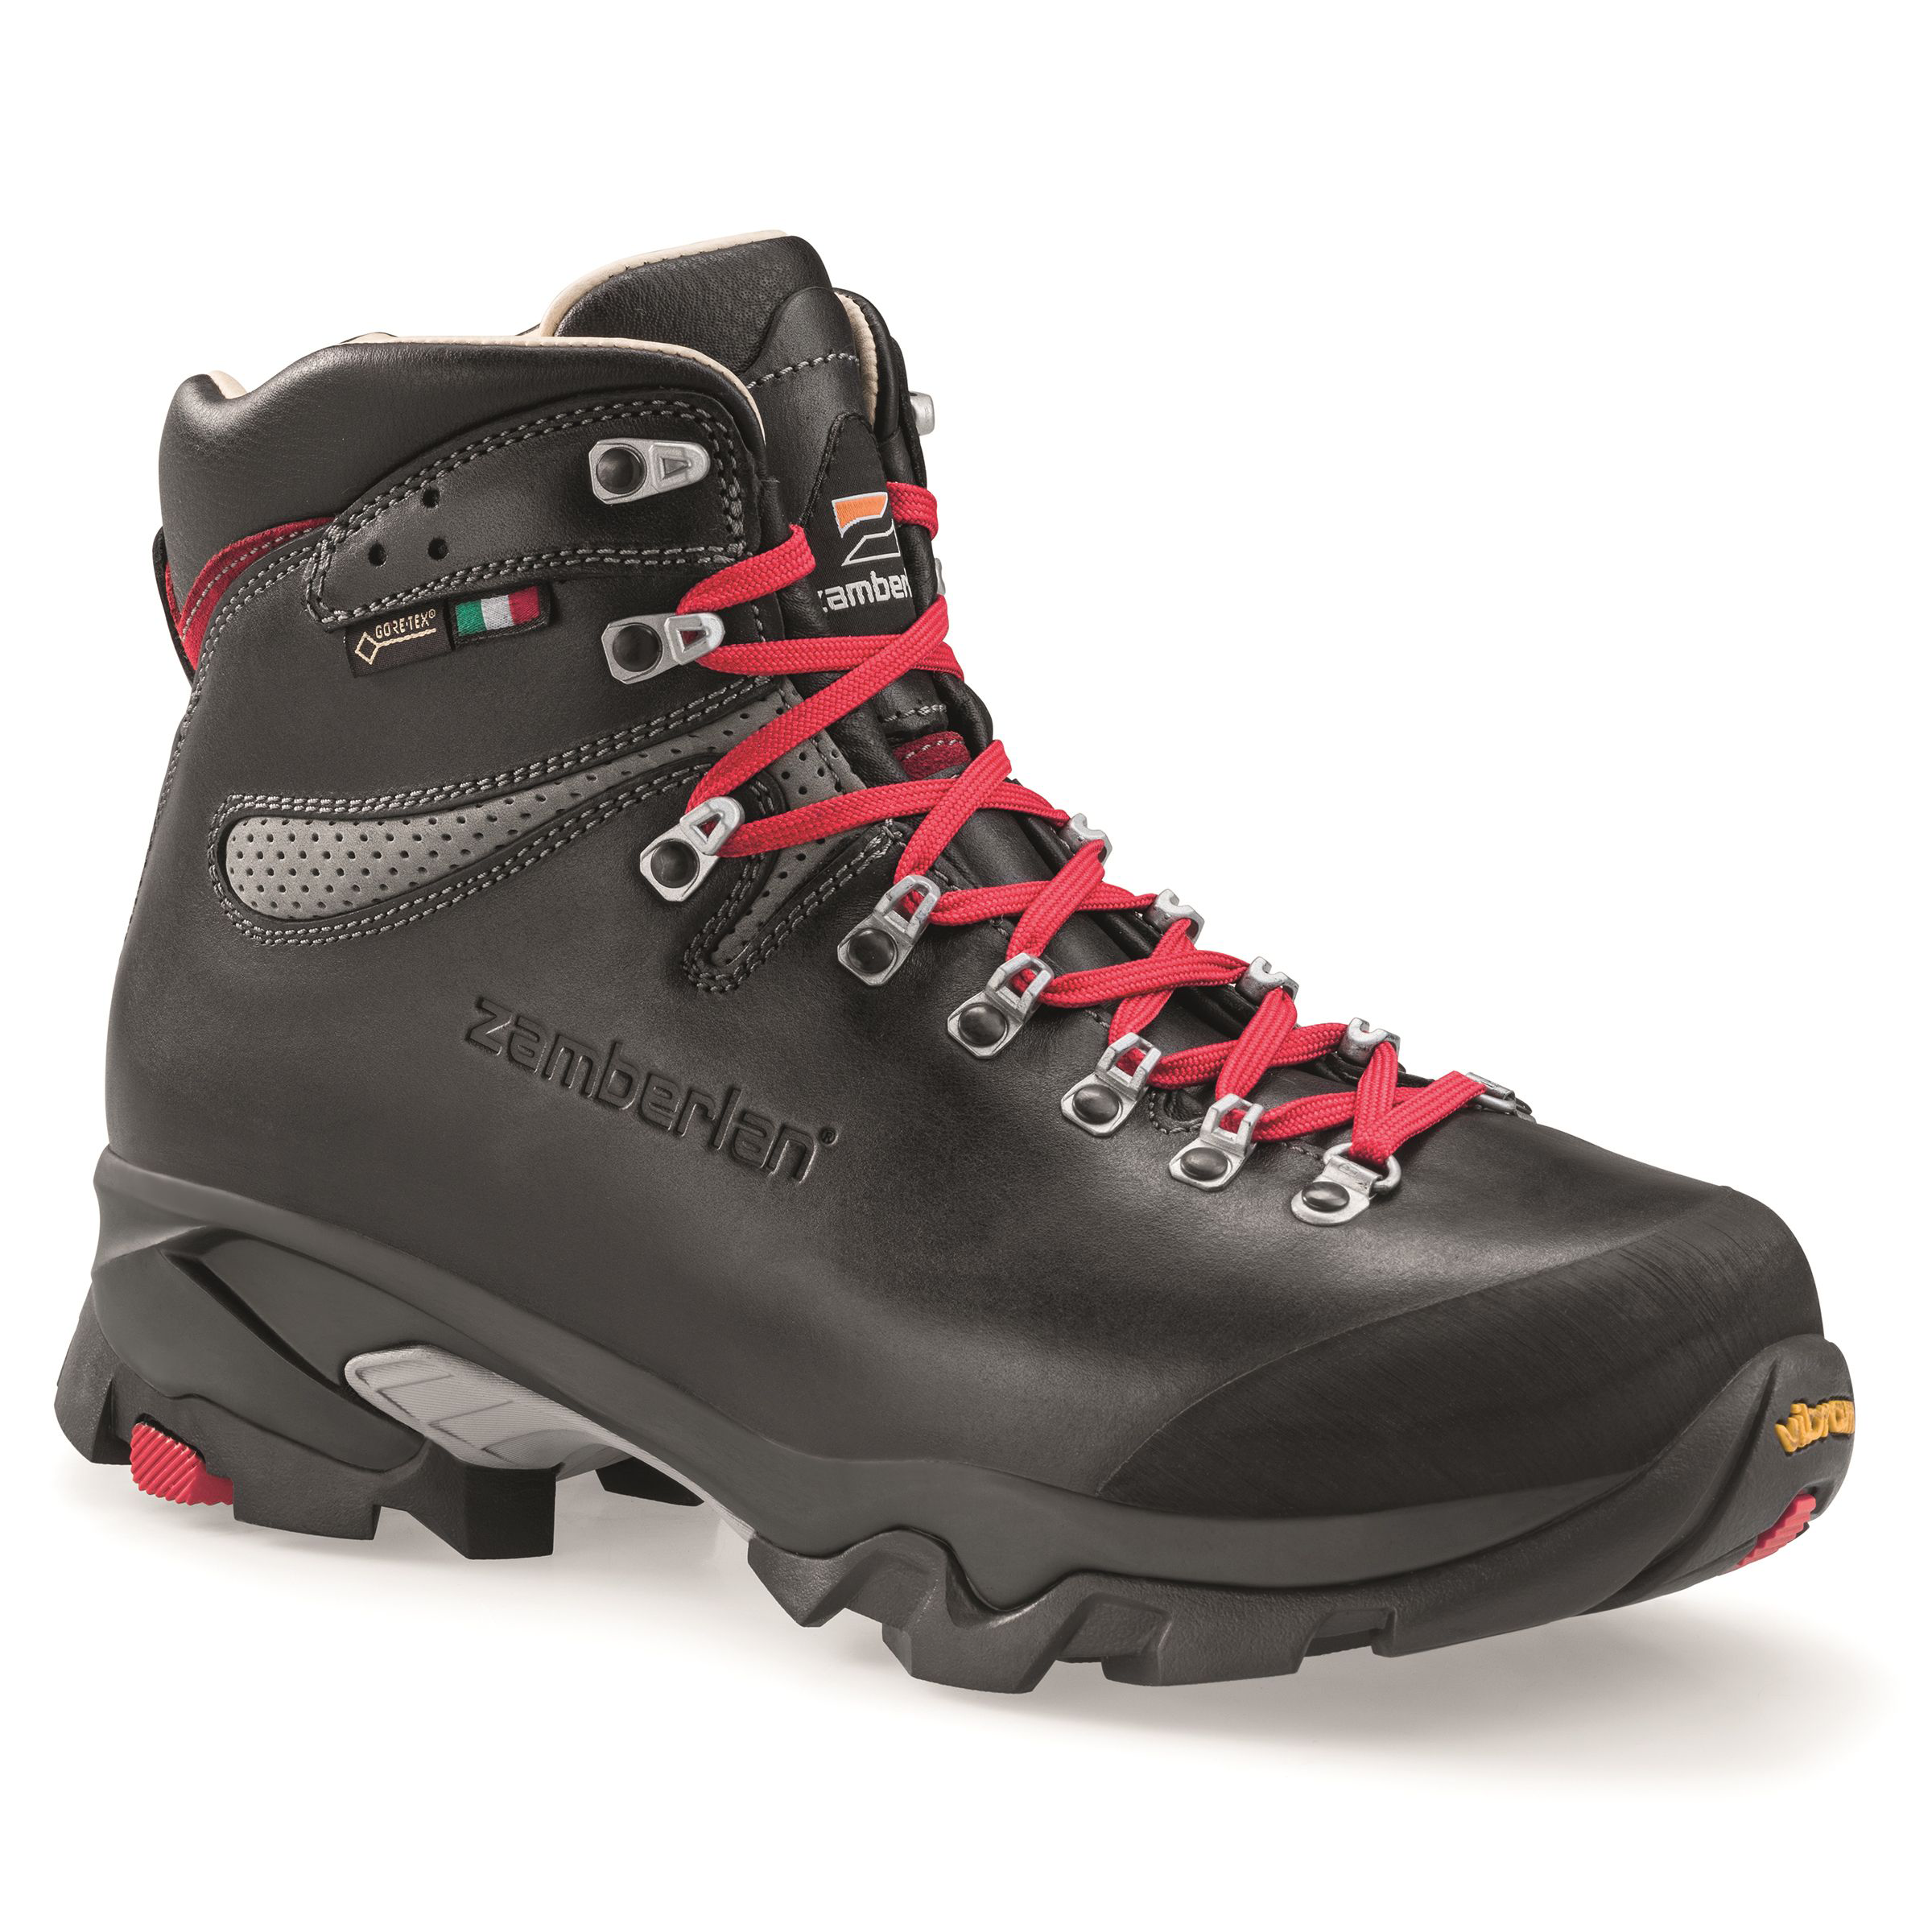 Zamberlan 1996 Vioz Lux GTX RR Waterproof Hiking Boots for Men - Waxed Black - 14M